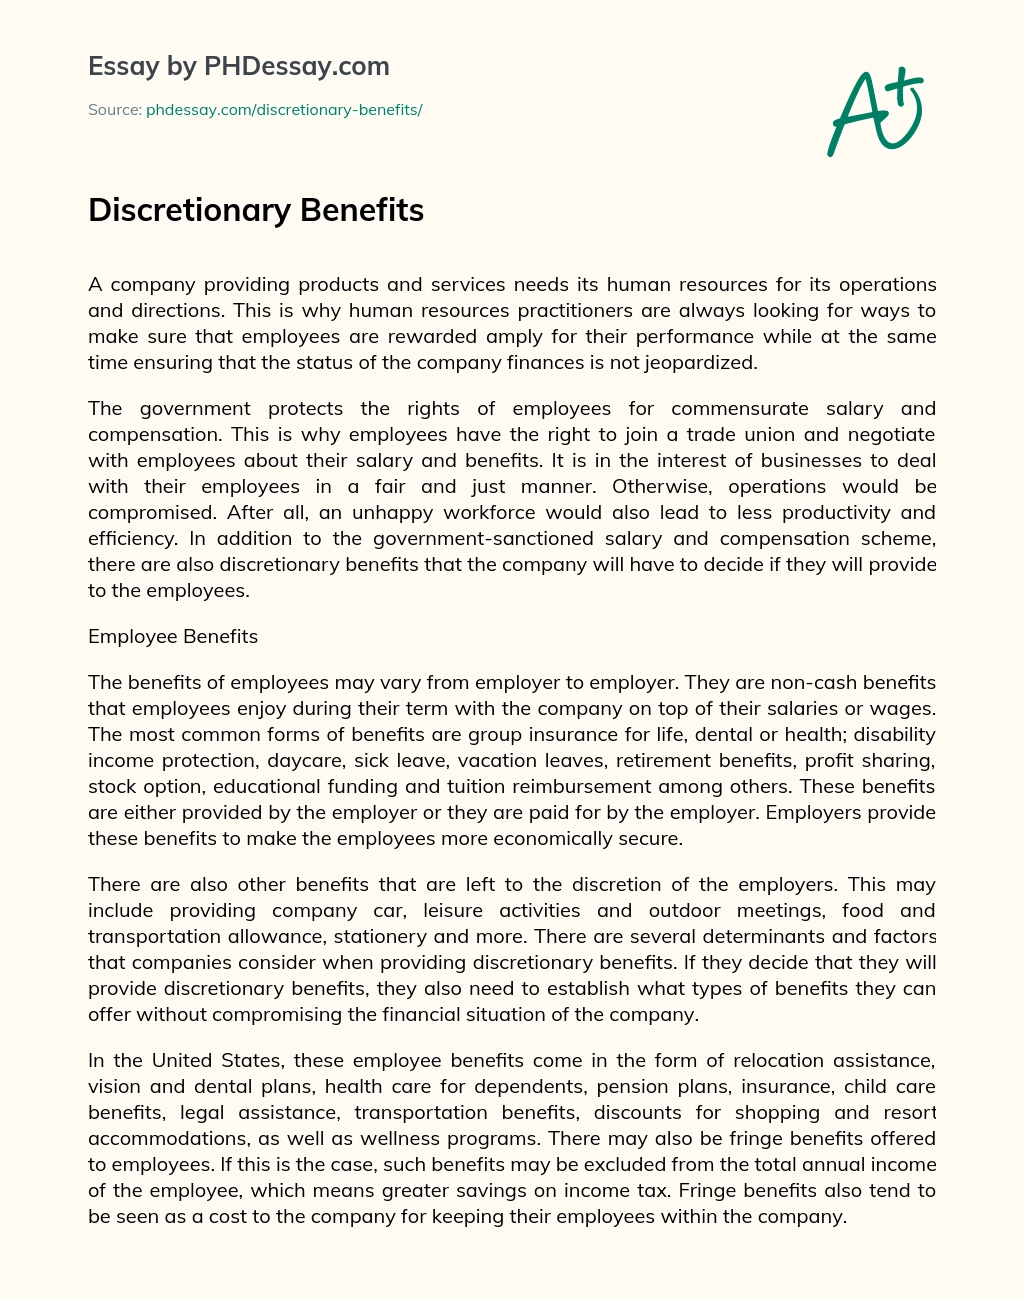 Discretionary Benefits essay